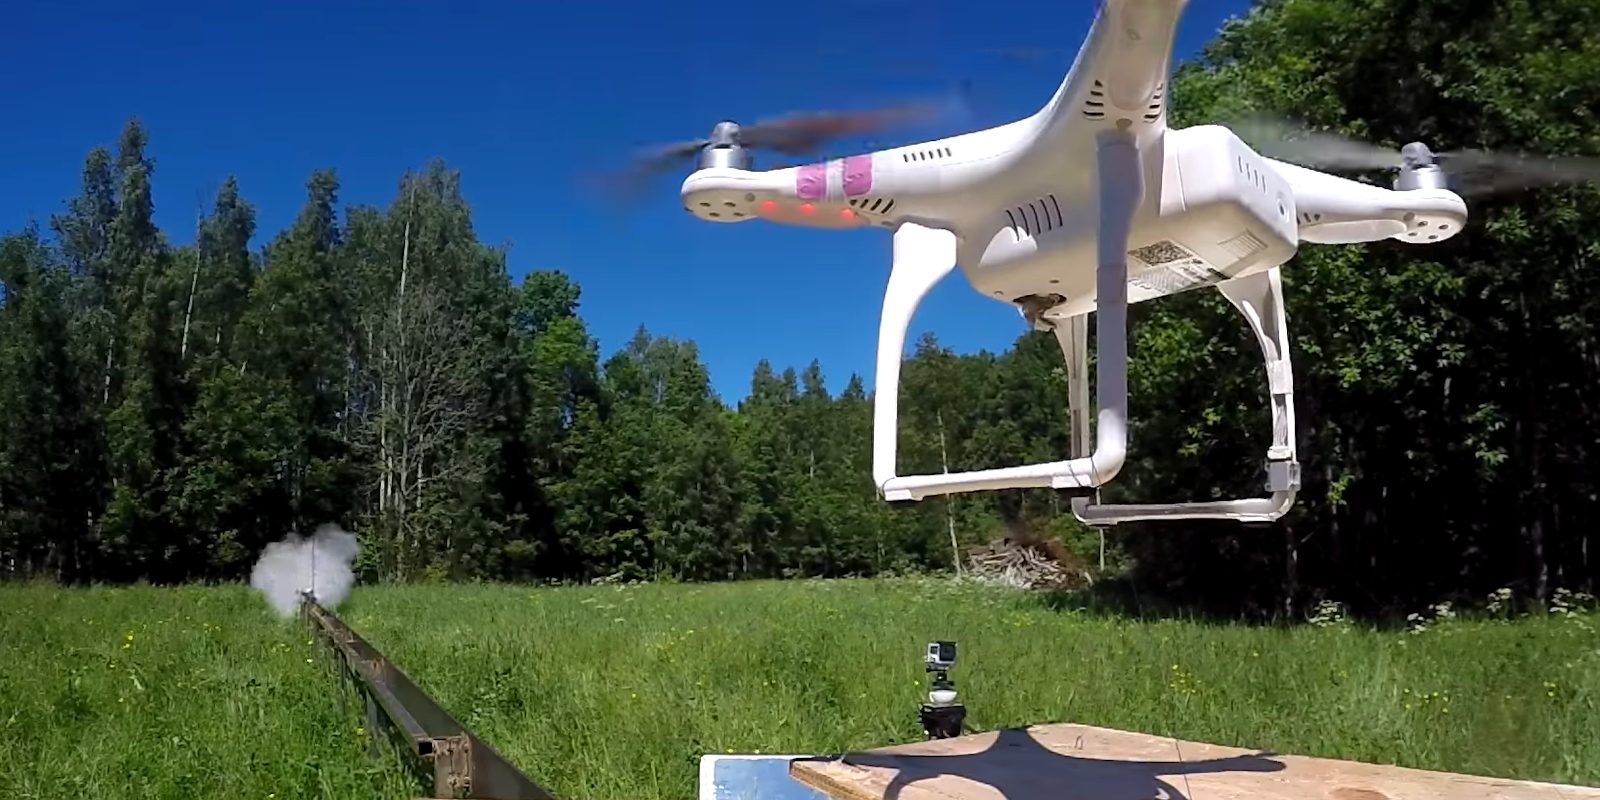 drone katana youtube video cut in half